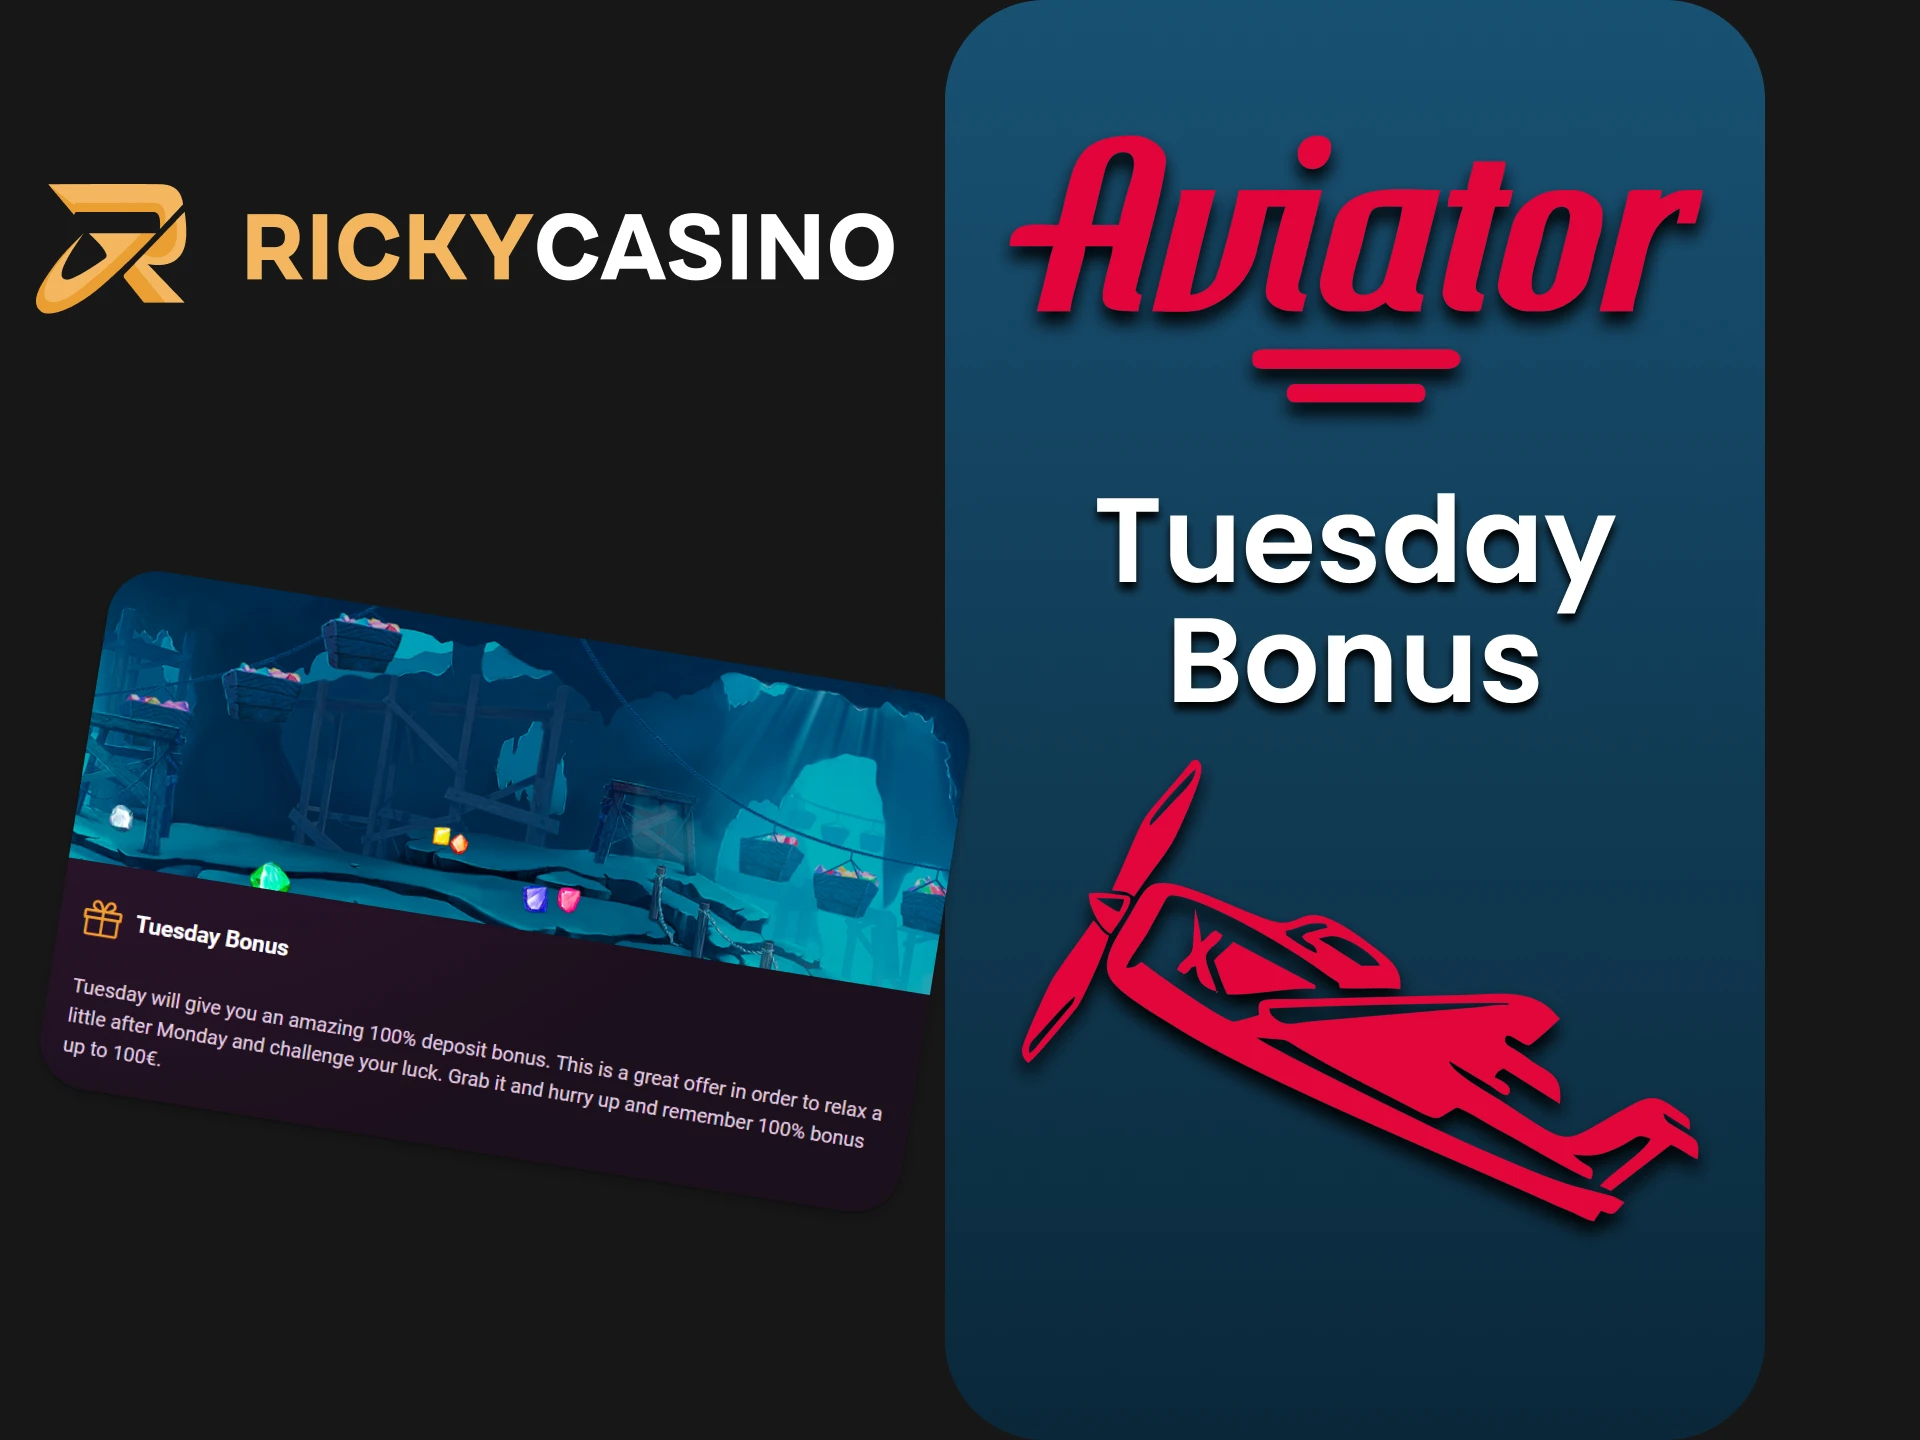 Ricky Casino gives bonuses to Aviator players on Tuesdays.